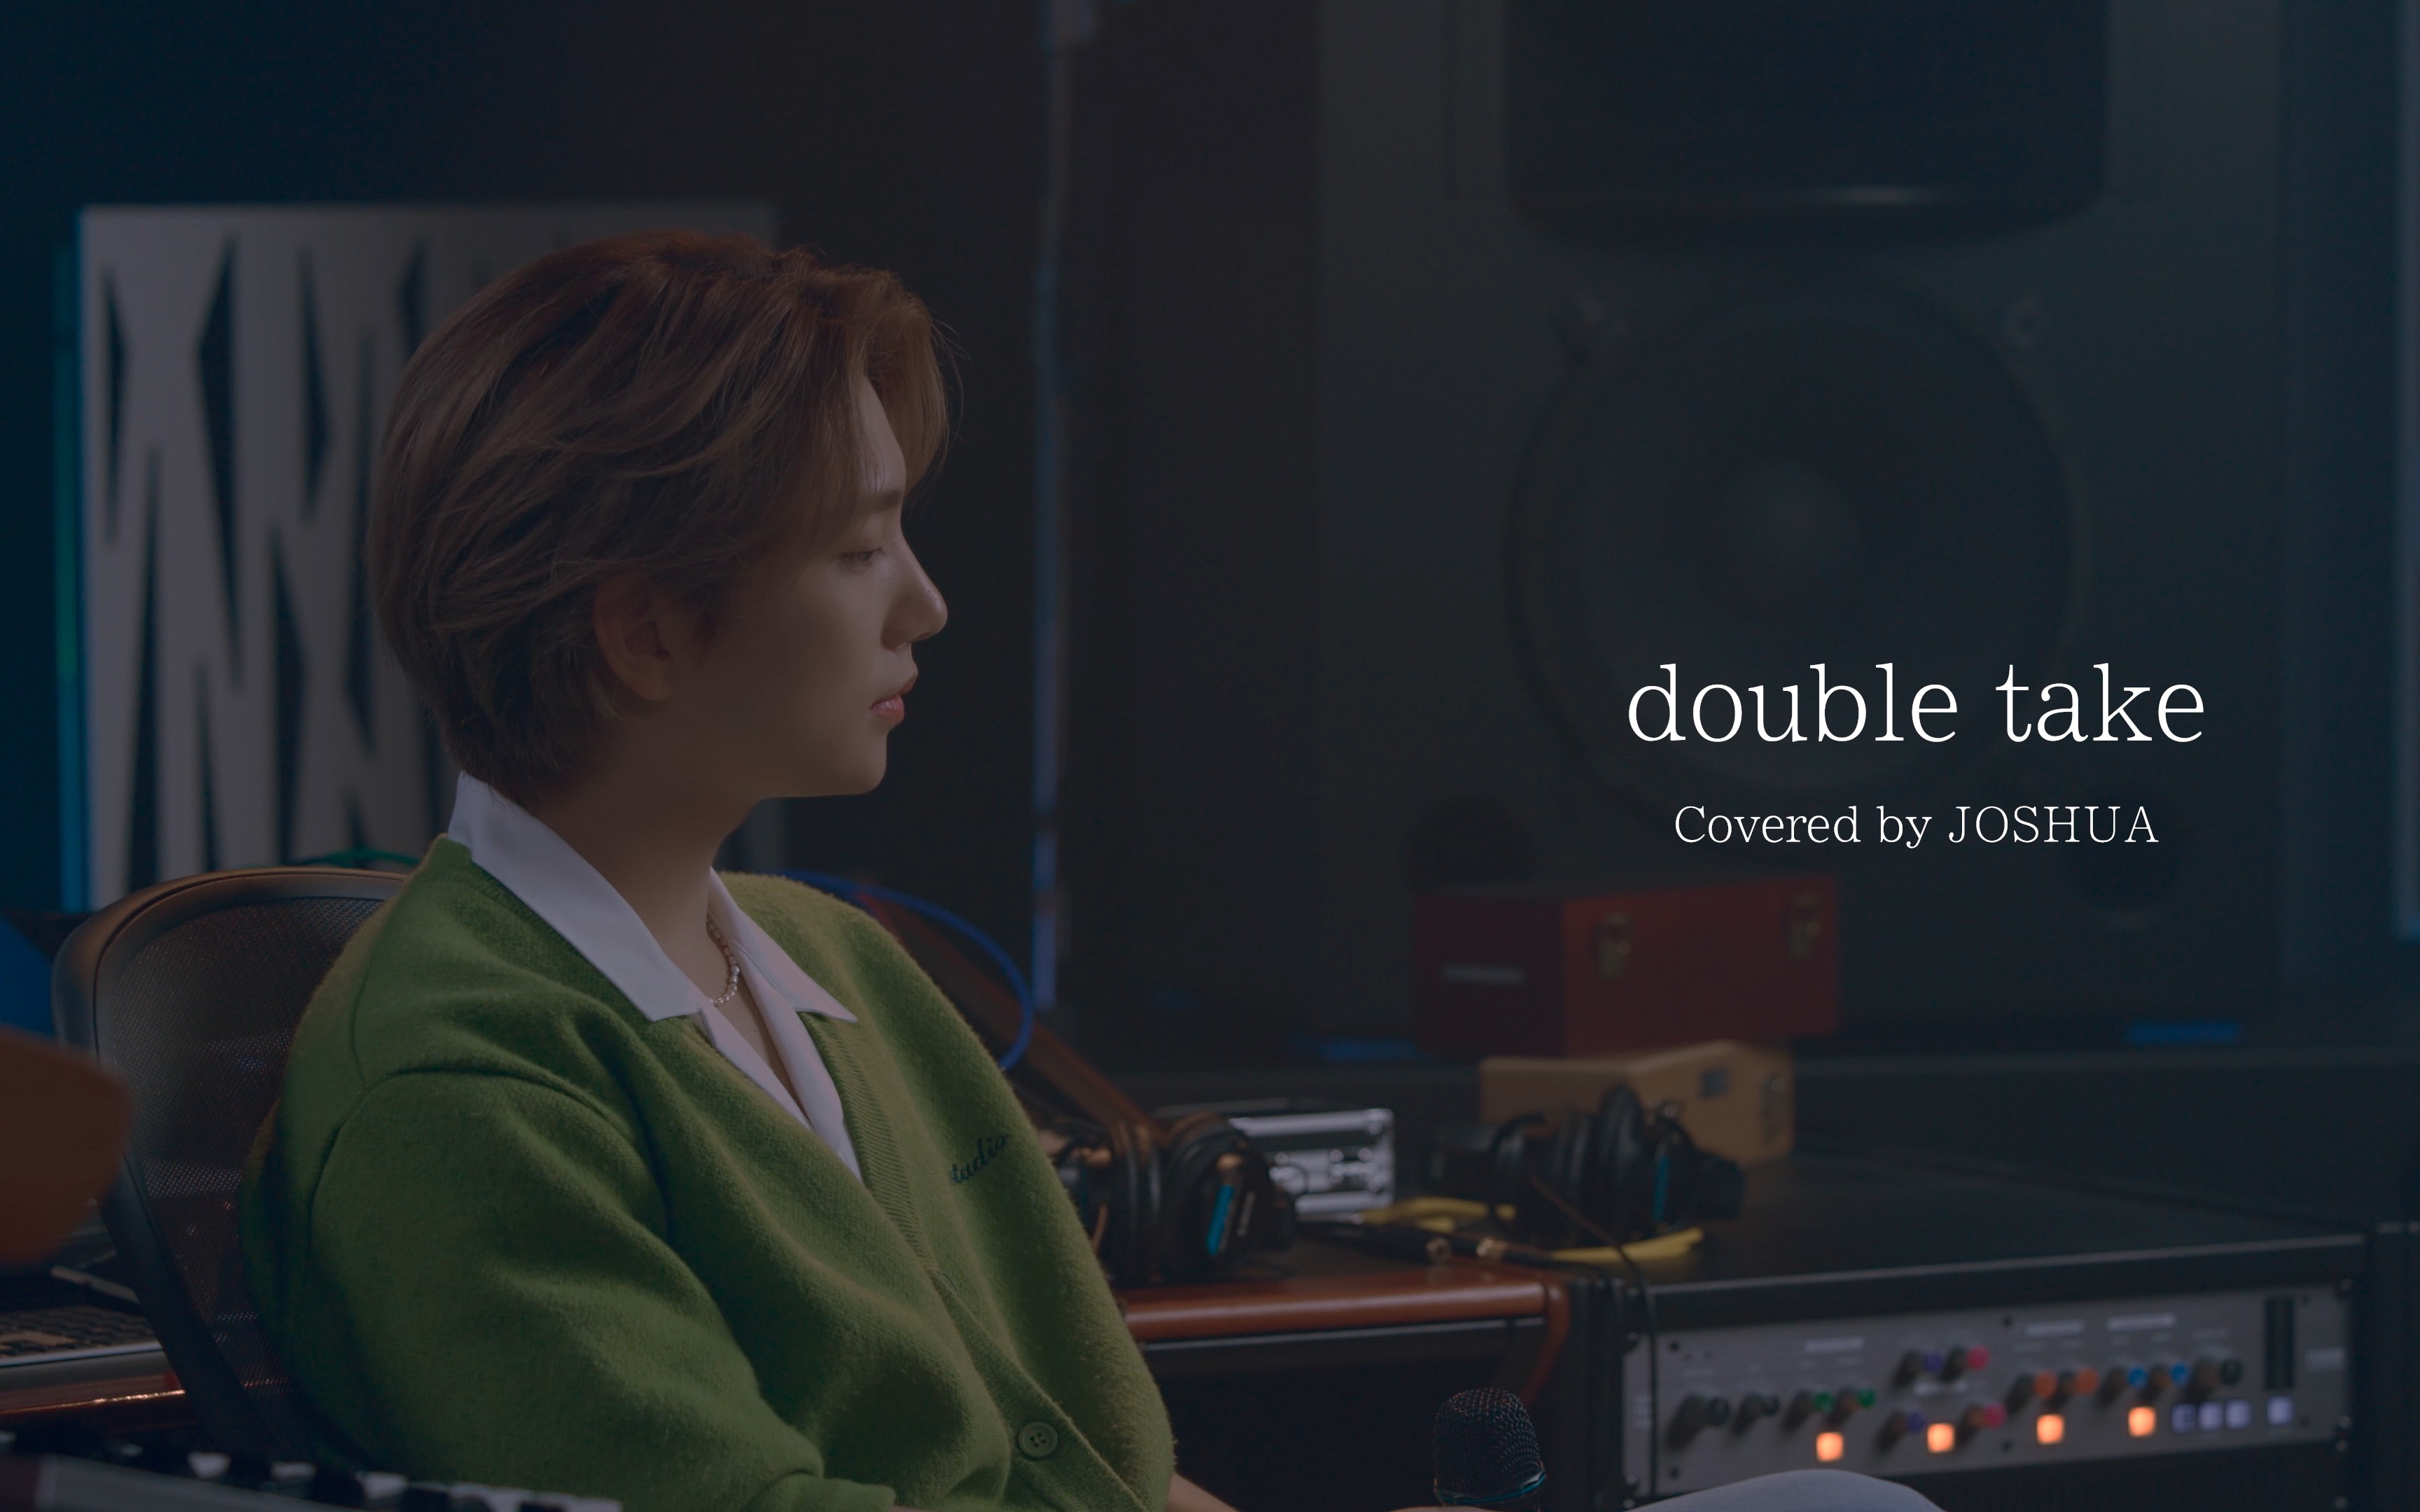 [COVER] JOSHUA - double take (原曲 : dhruv)